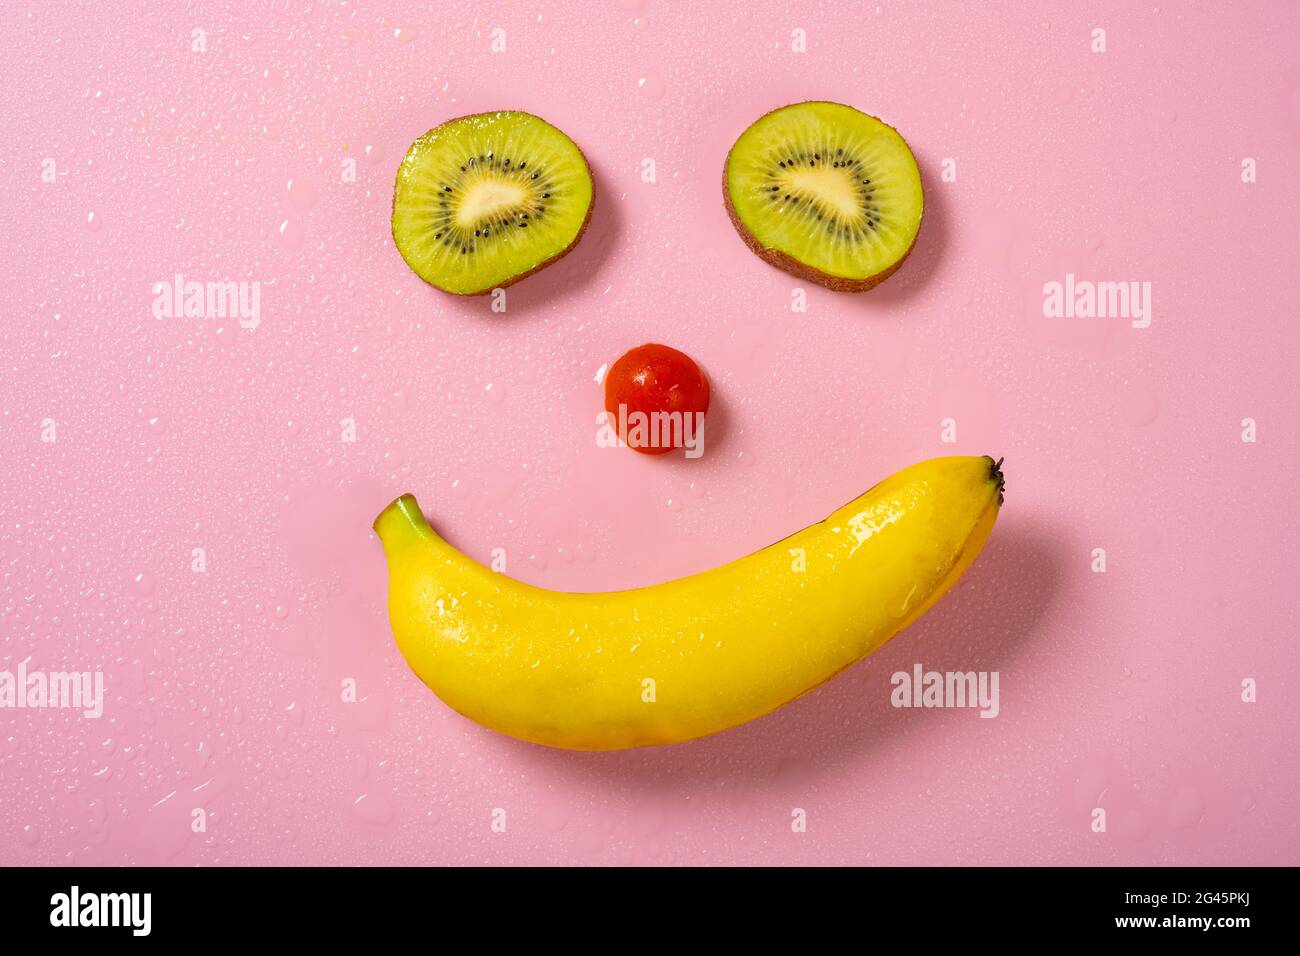 smiling face shaped by kiwi fruit and banana Stock Photo